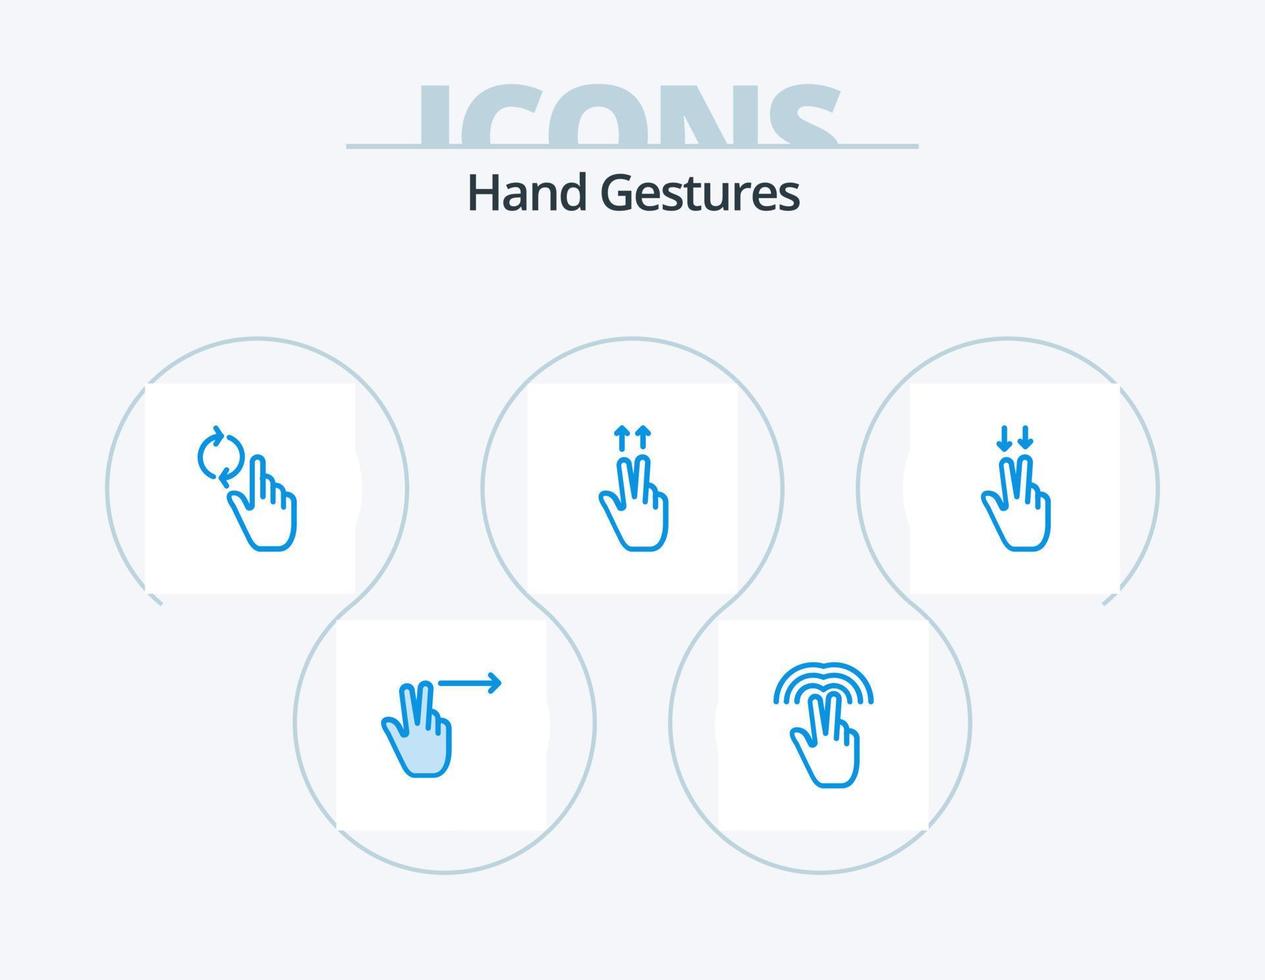 Handgesten blau Icon Pack 5 Icon Design. runter. Geste. Hand. Finger. Geste vektor